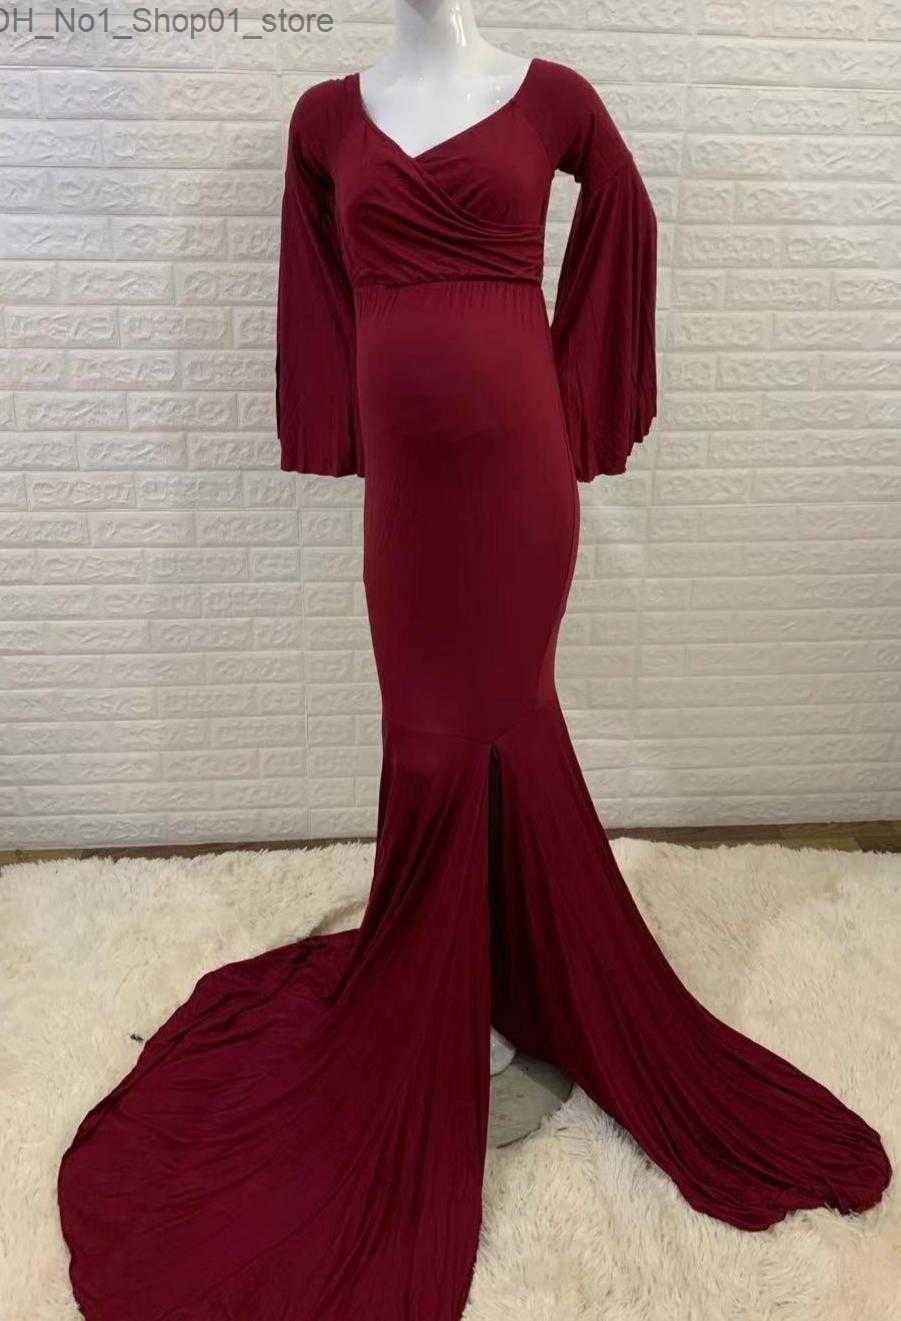 1x wine red dress